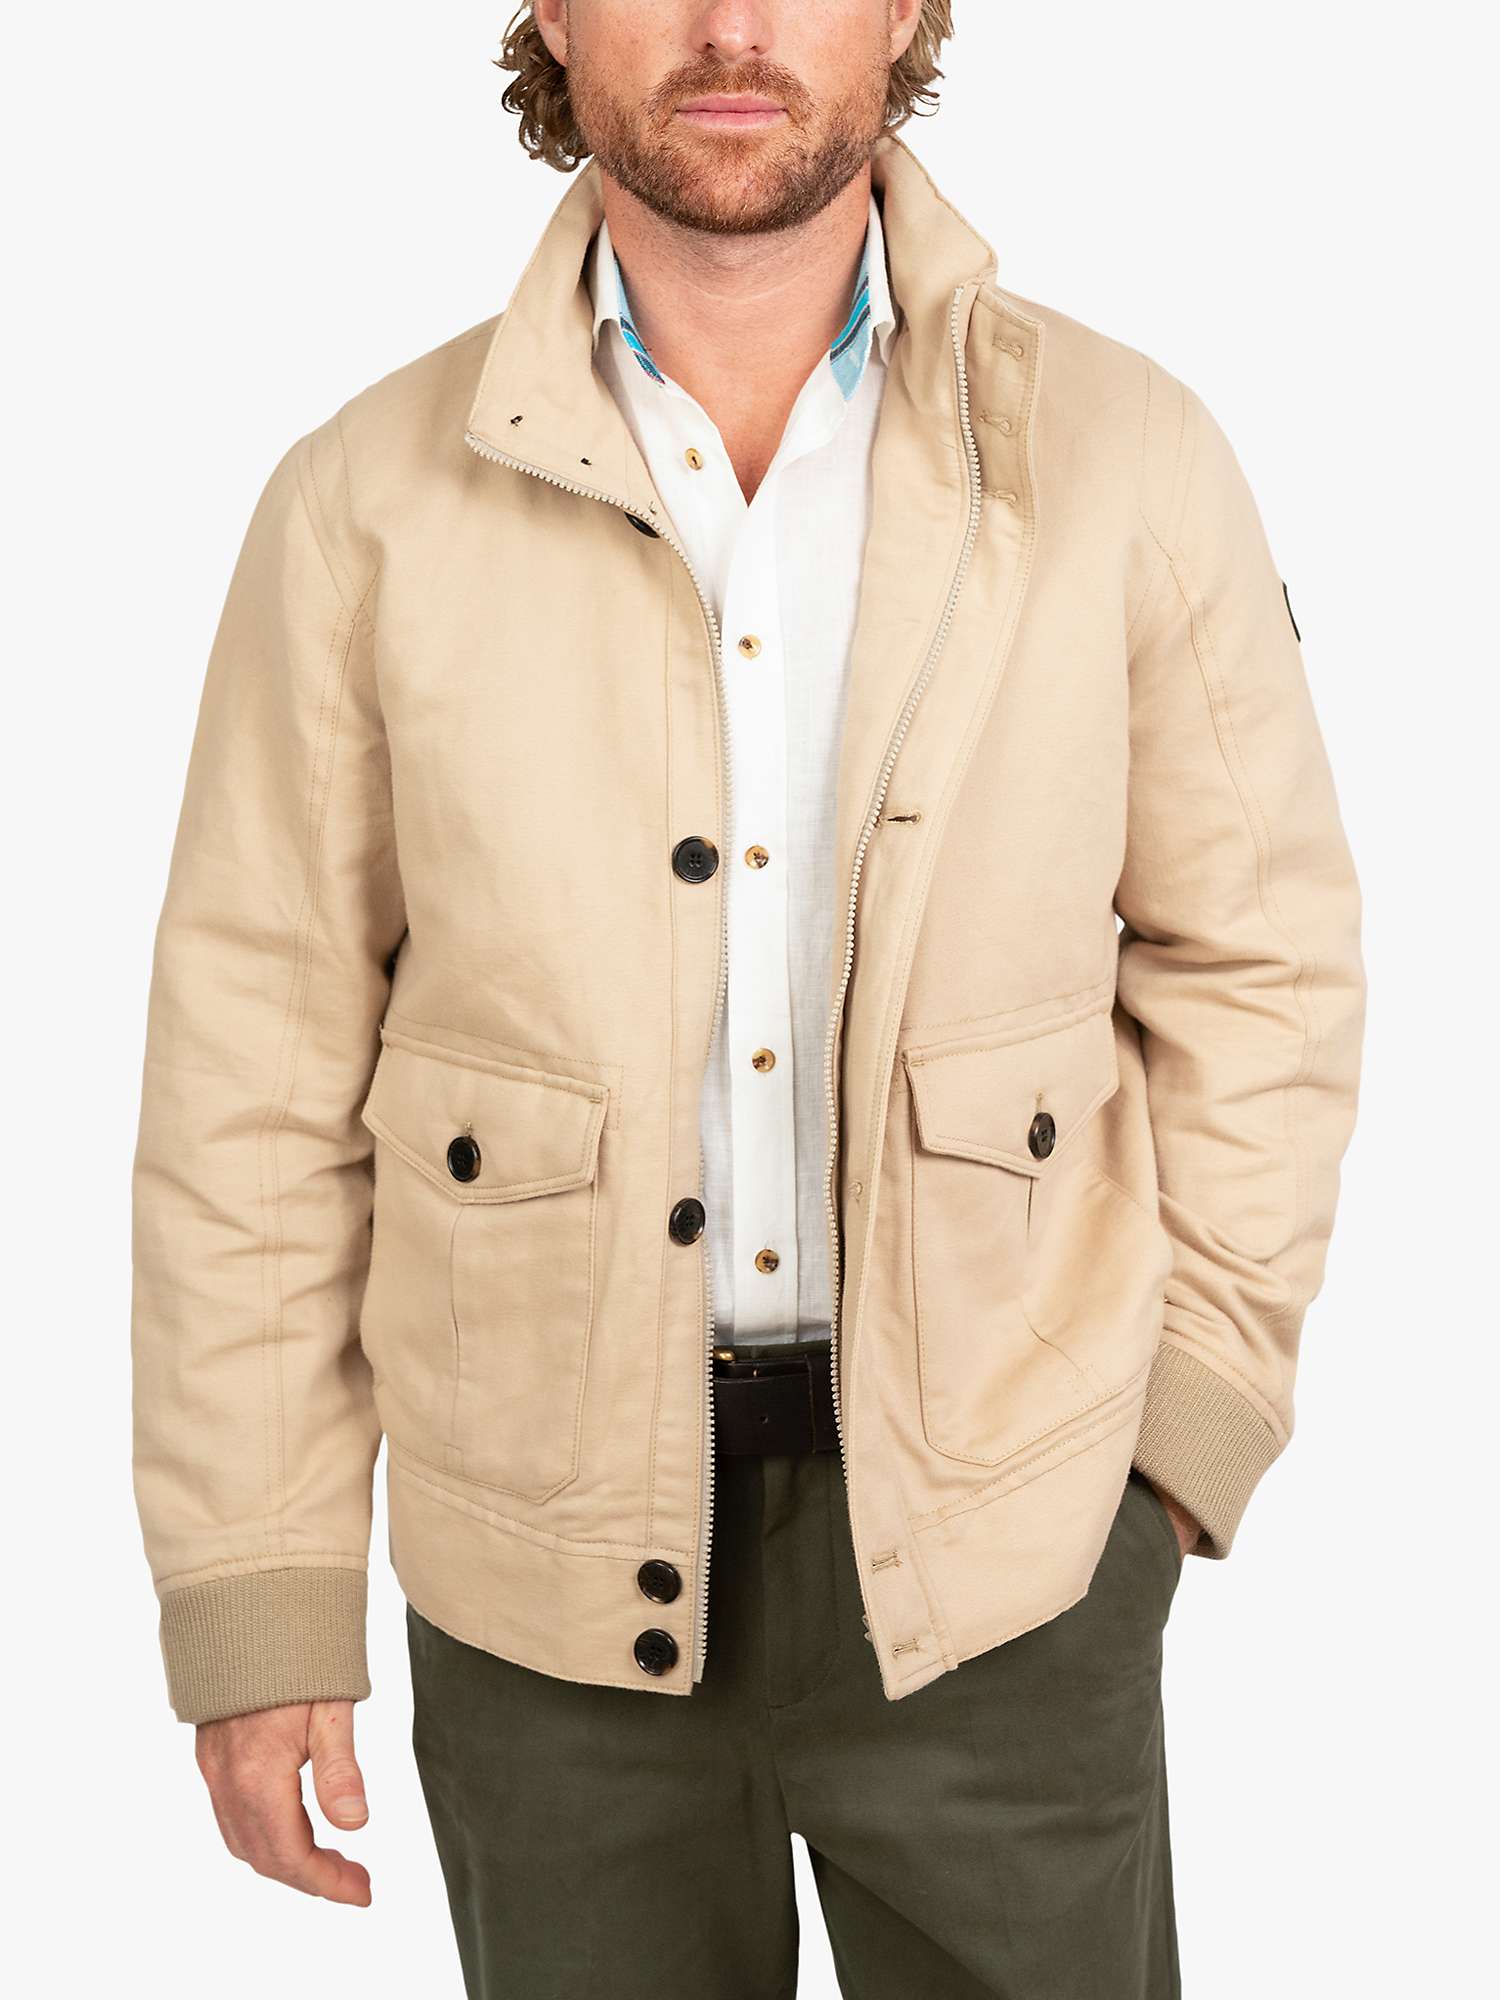 Buy KOY Linen Blend Ranger Jacket, Beige Online at johnlewis.com